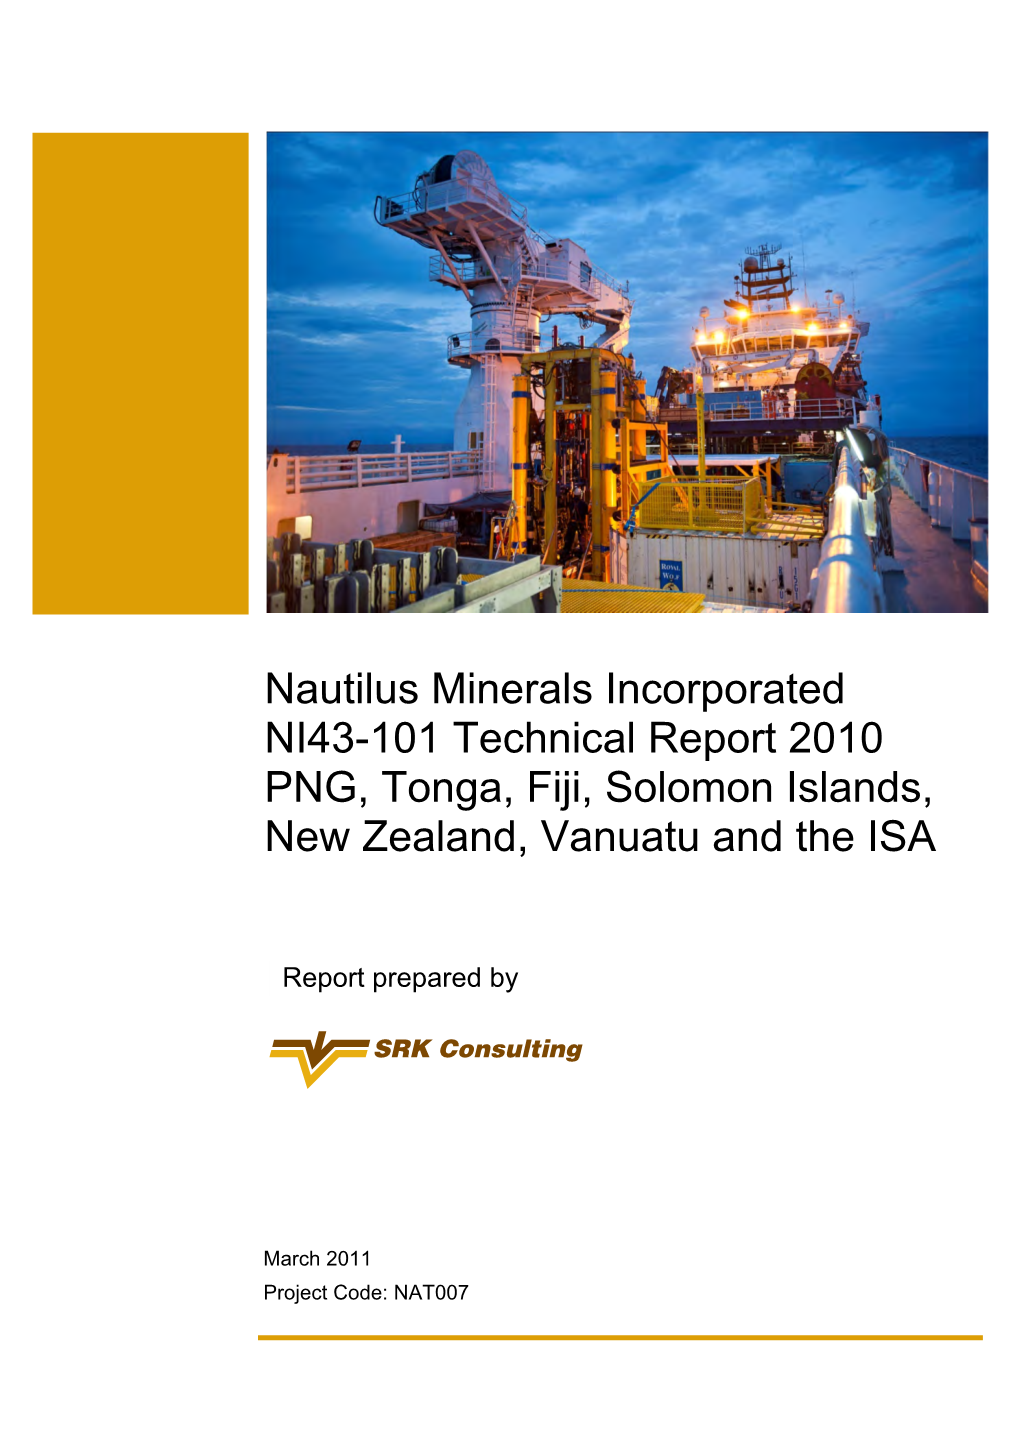 Nautilus Minerals Incorporated NI43-101 Technical Report 2010 PNG, Tonga, Fiji, Solomon Islands, New Zealand, Vanuatu and the ISA